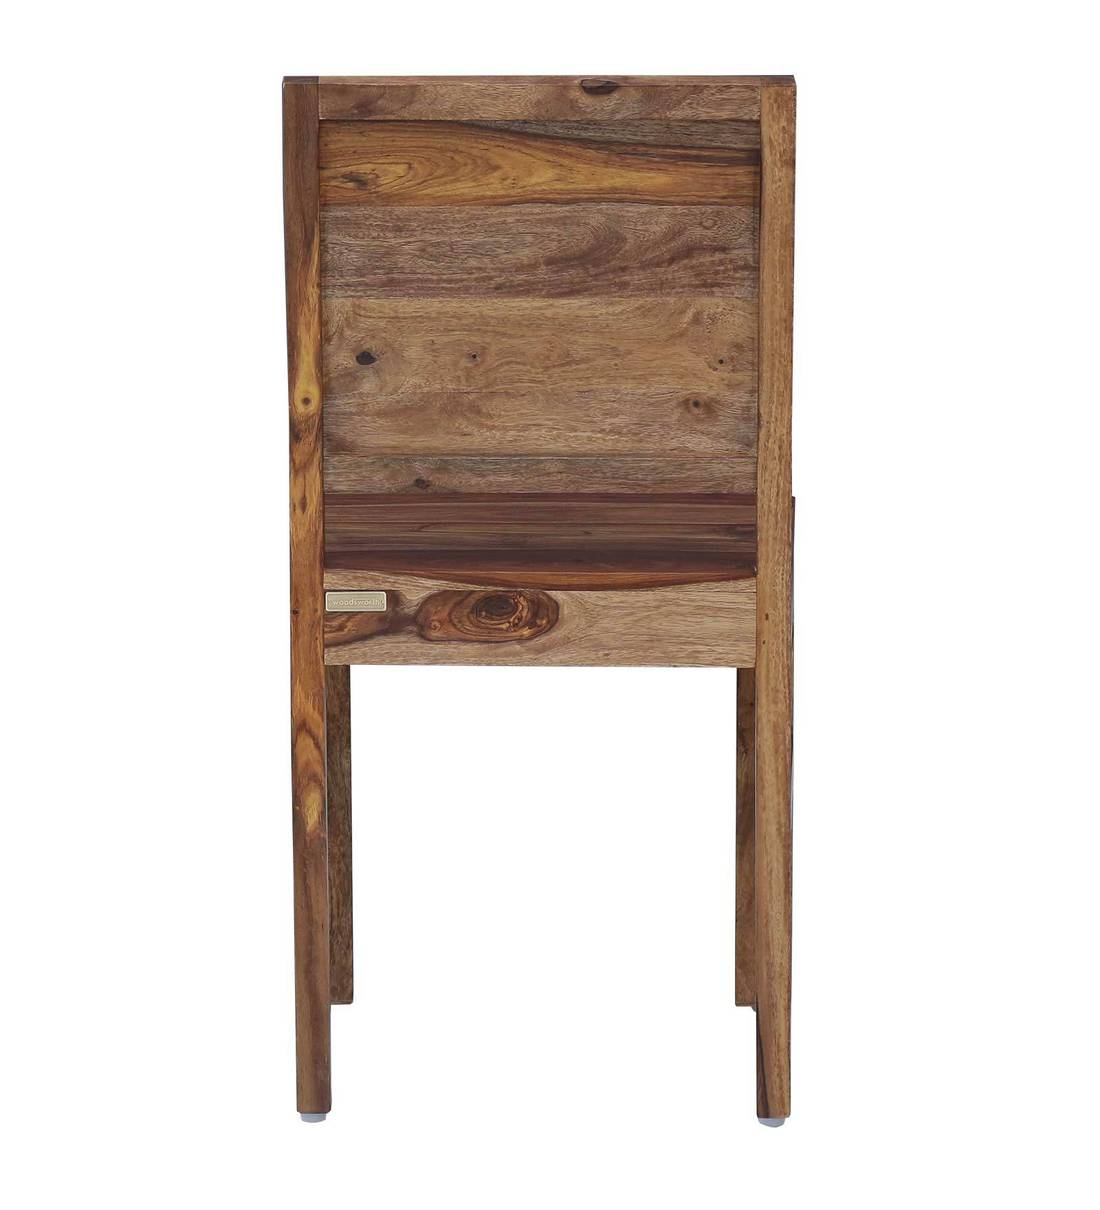 Acro Wooden 6 Seater Dining Table Set - Rajwada Furnish